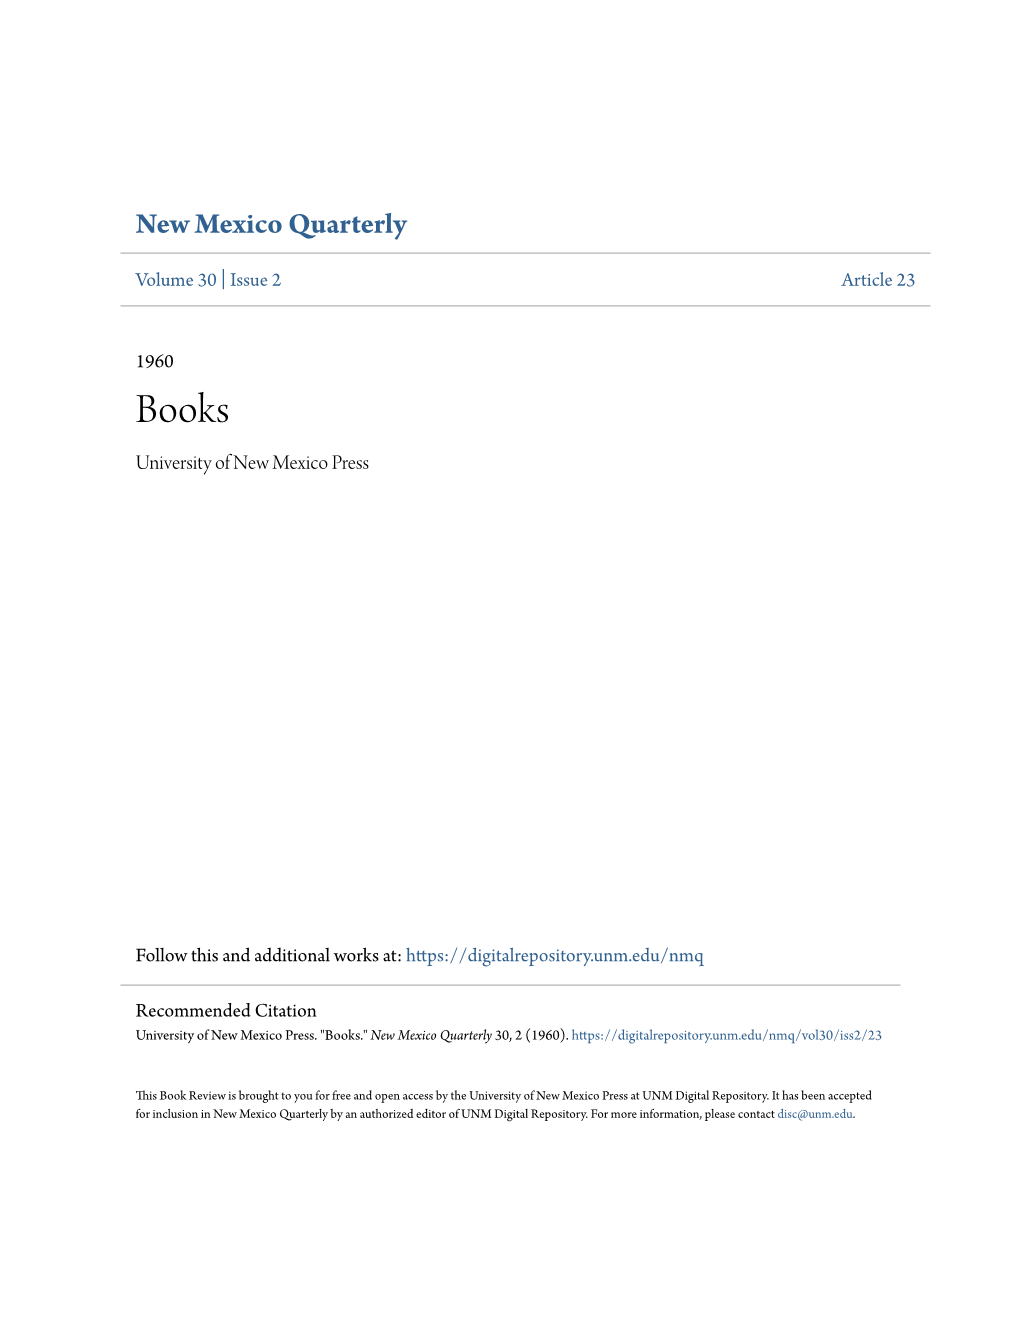 Books University of New Mexico Press